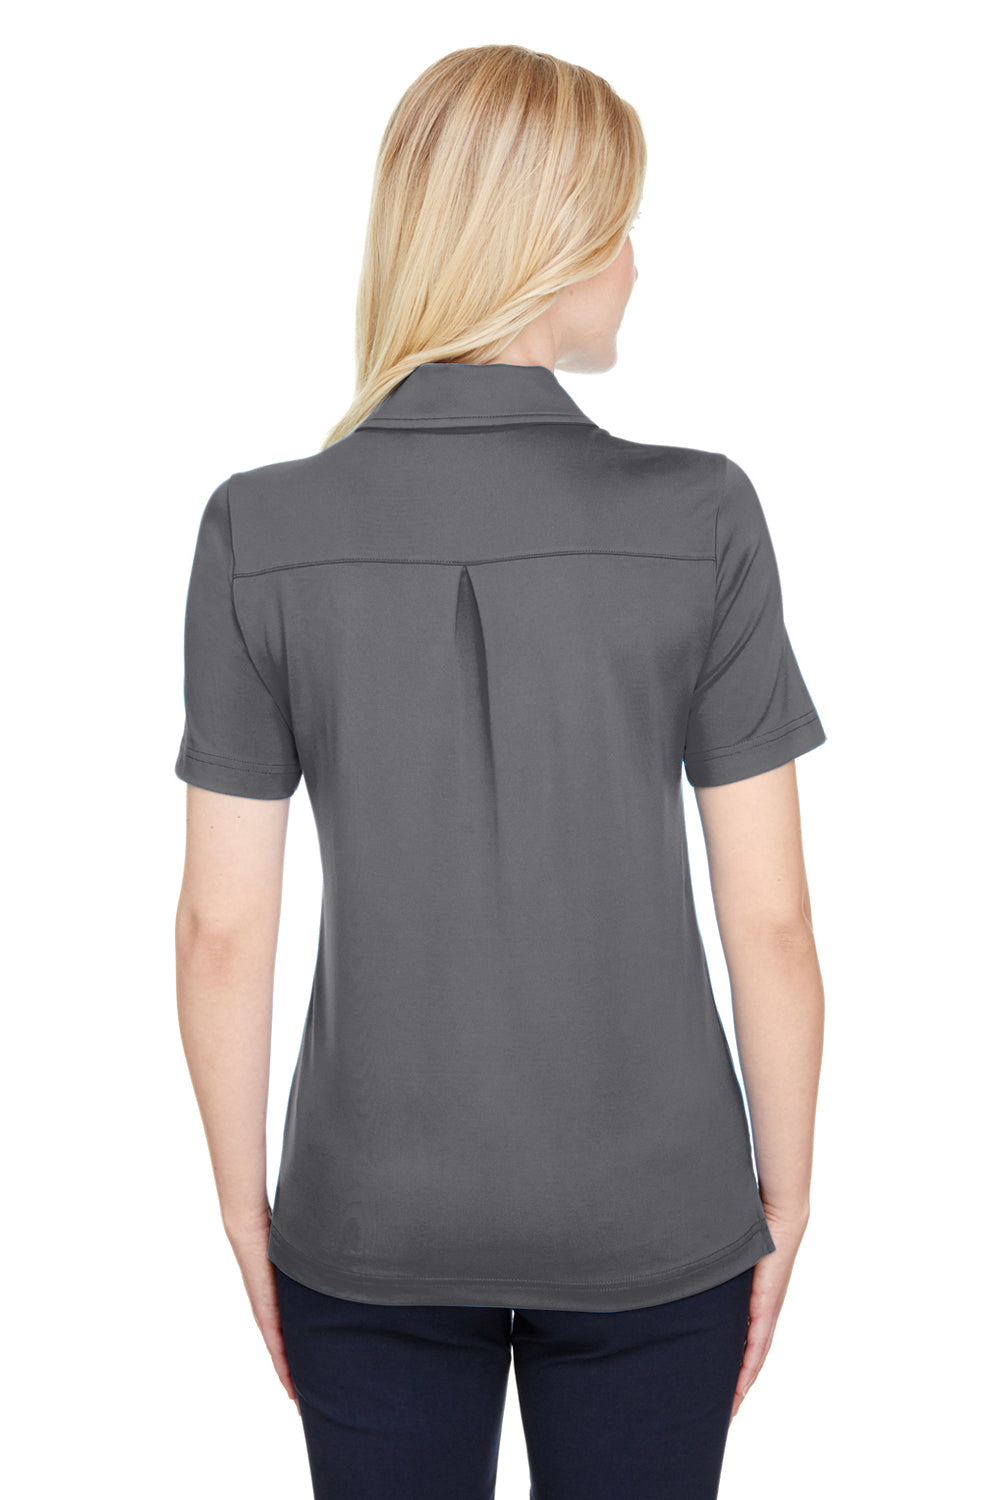 Devon & Jones DG21W Womens CrownLux Range Flex Performance Moisture Wicking Short Sleeve Polo Shirt Graphite Grey Back